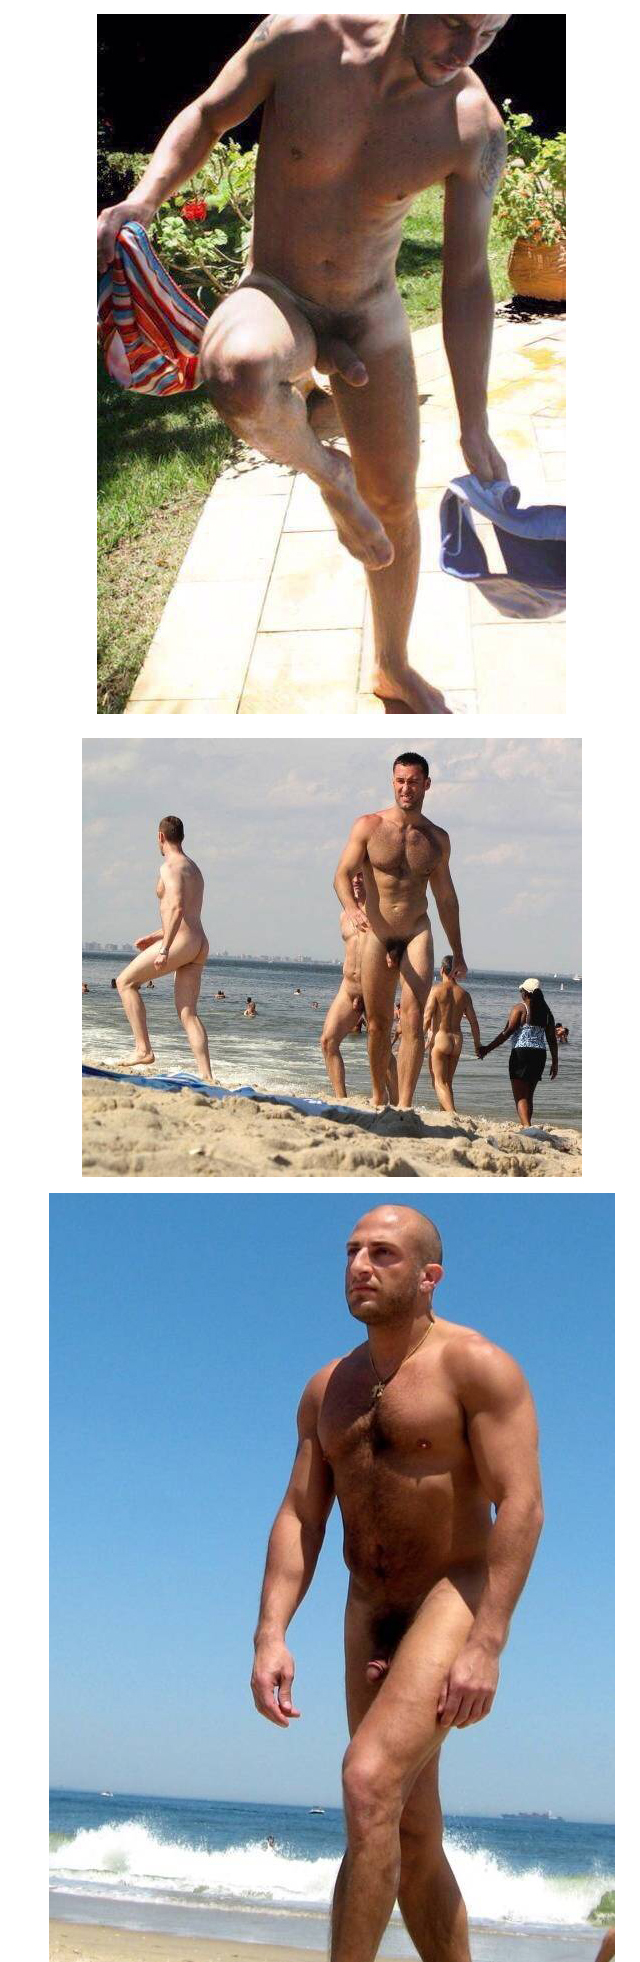 single straight nudist men beach